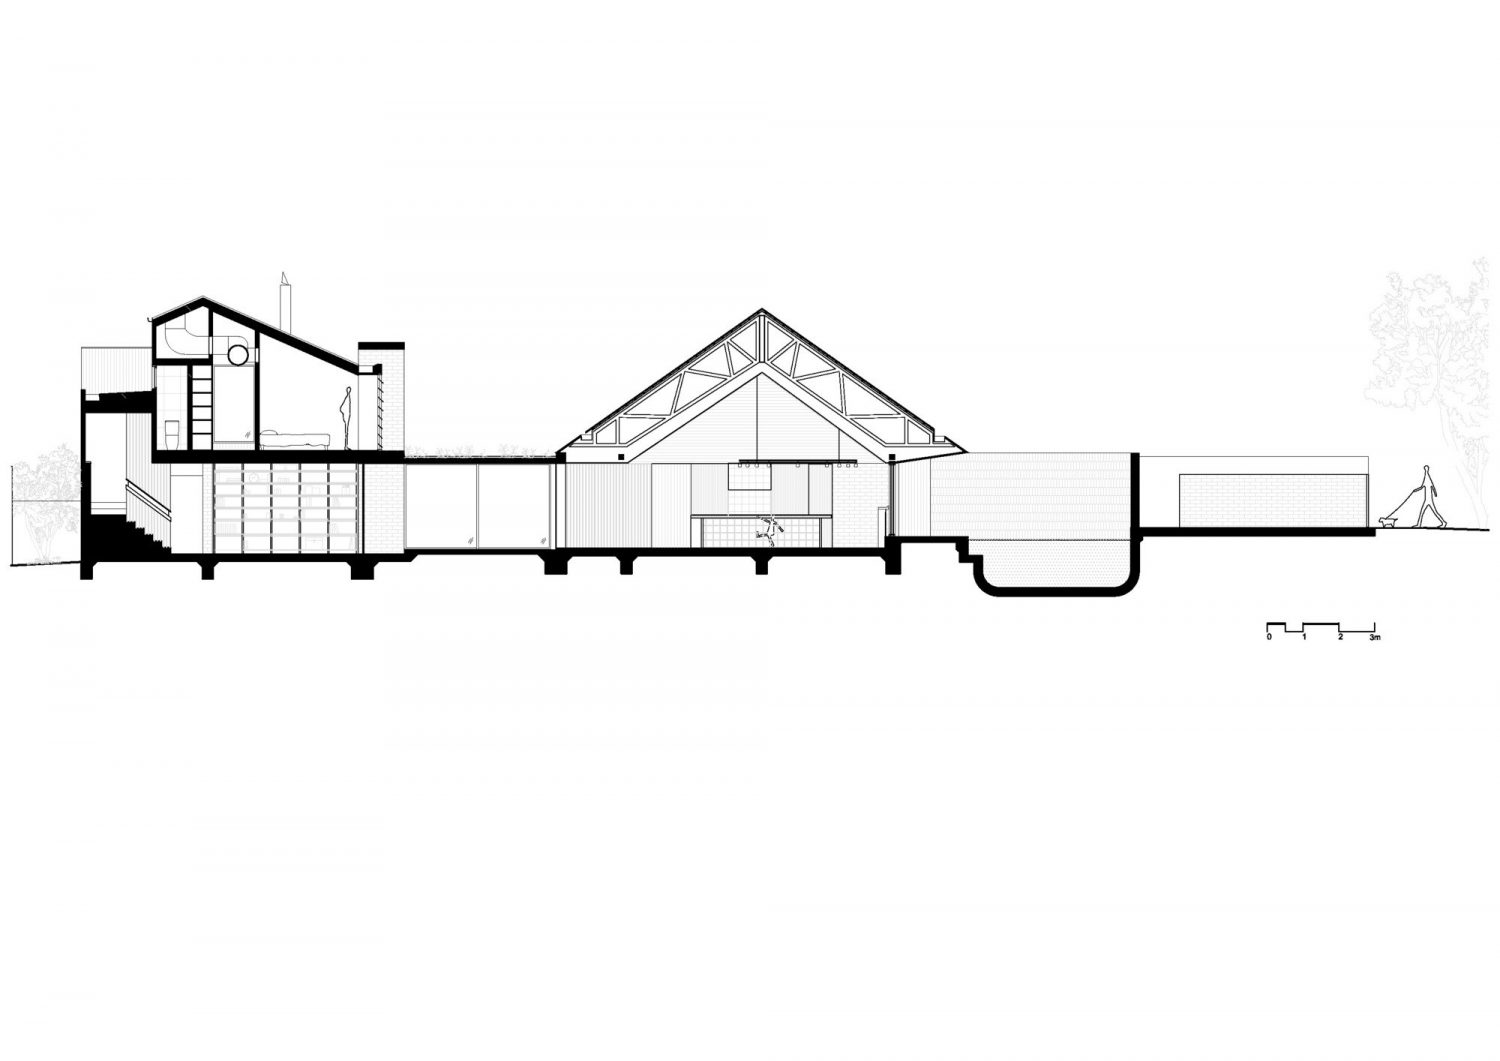 Deepdene House by Kennedy Nolan Architects